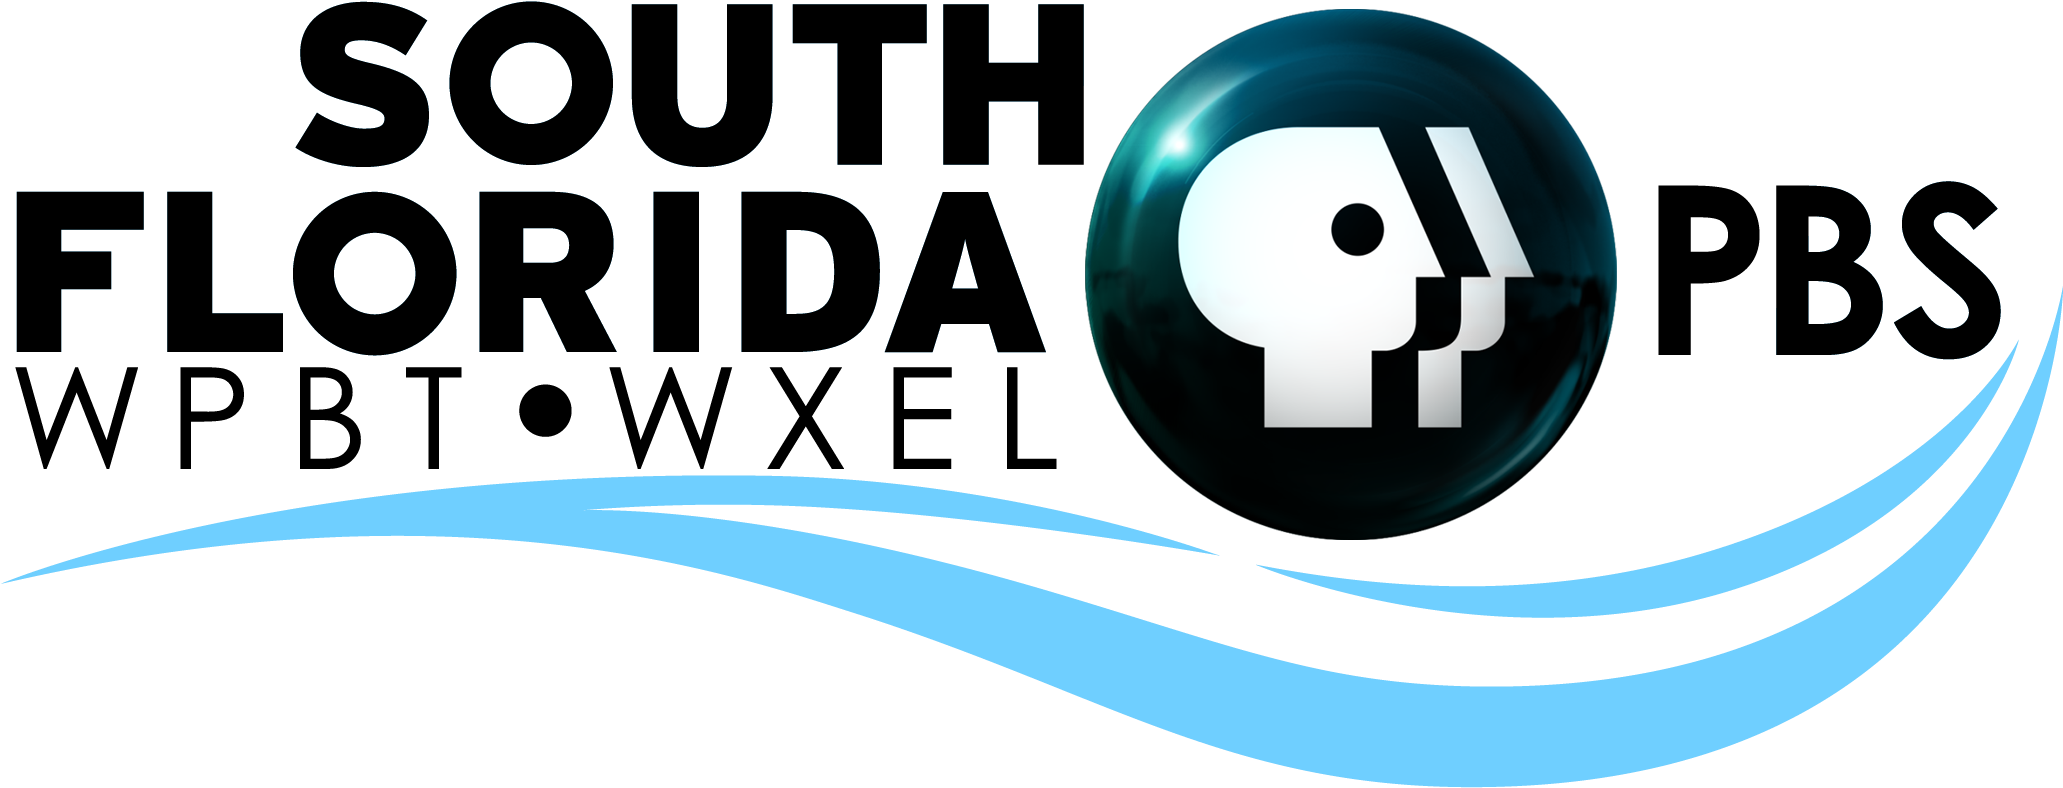 South Florida Pbs Logo (2128x808)